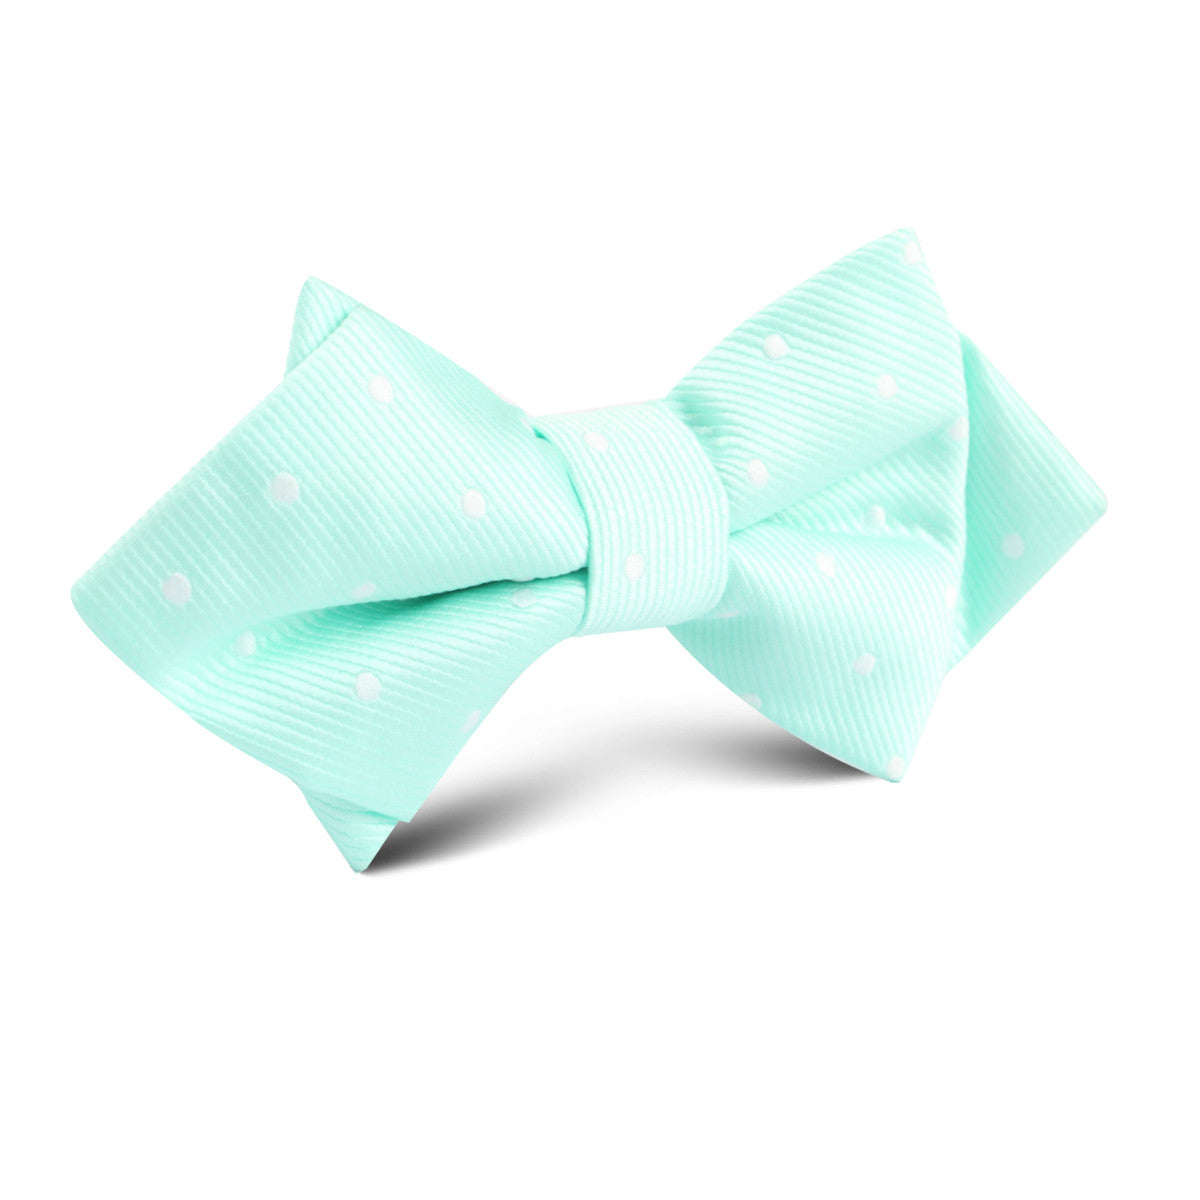 Mint Green with White Polka Dots Diamond Bow Tie